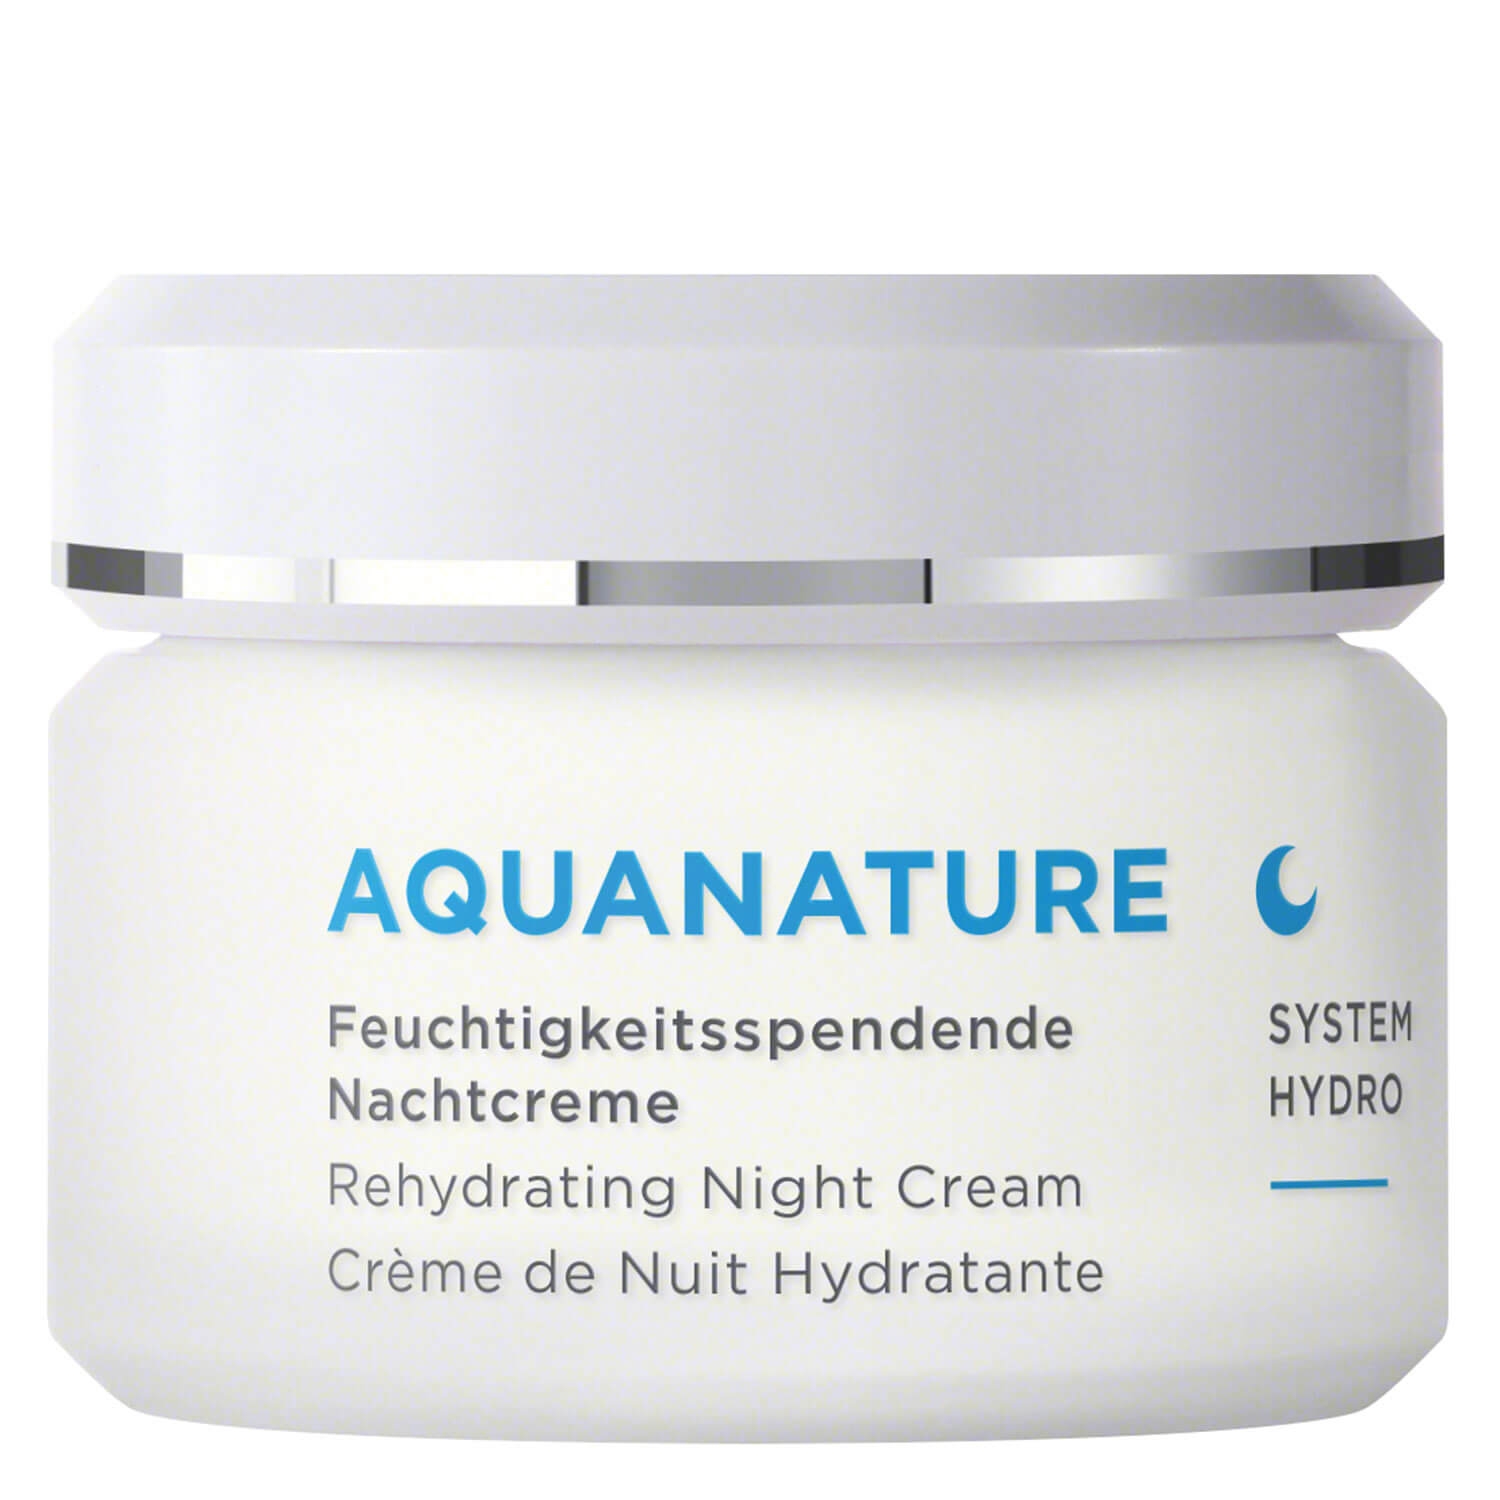 Product image from Aquanature - Feuchtigkeitsspendende Nachtcreme